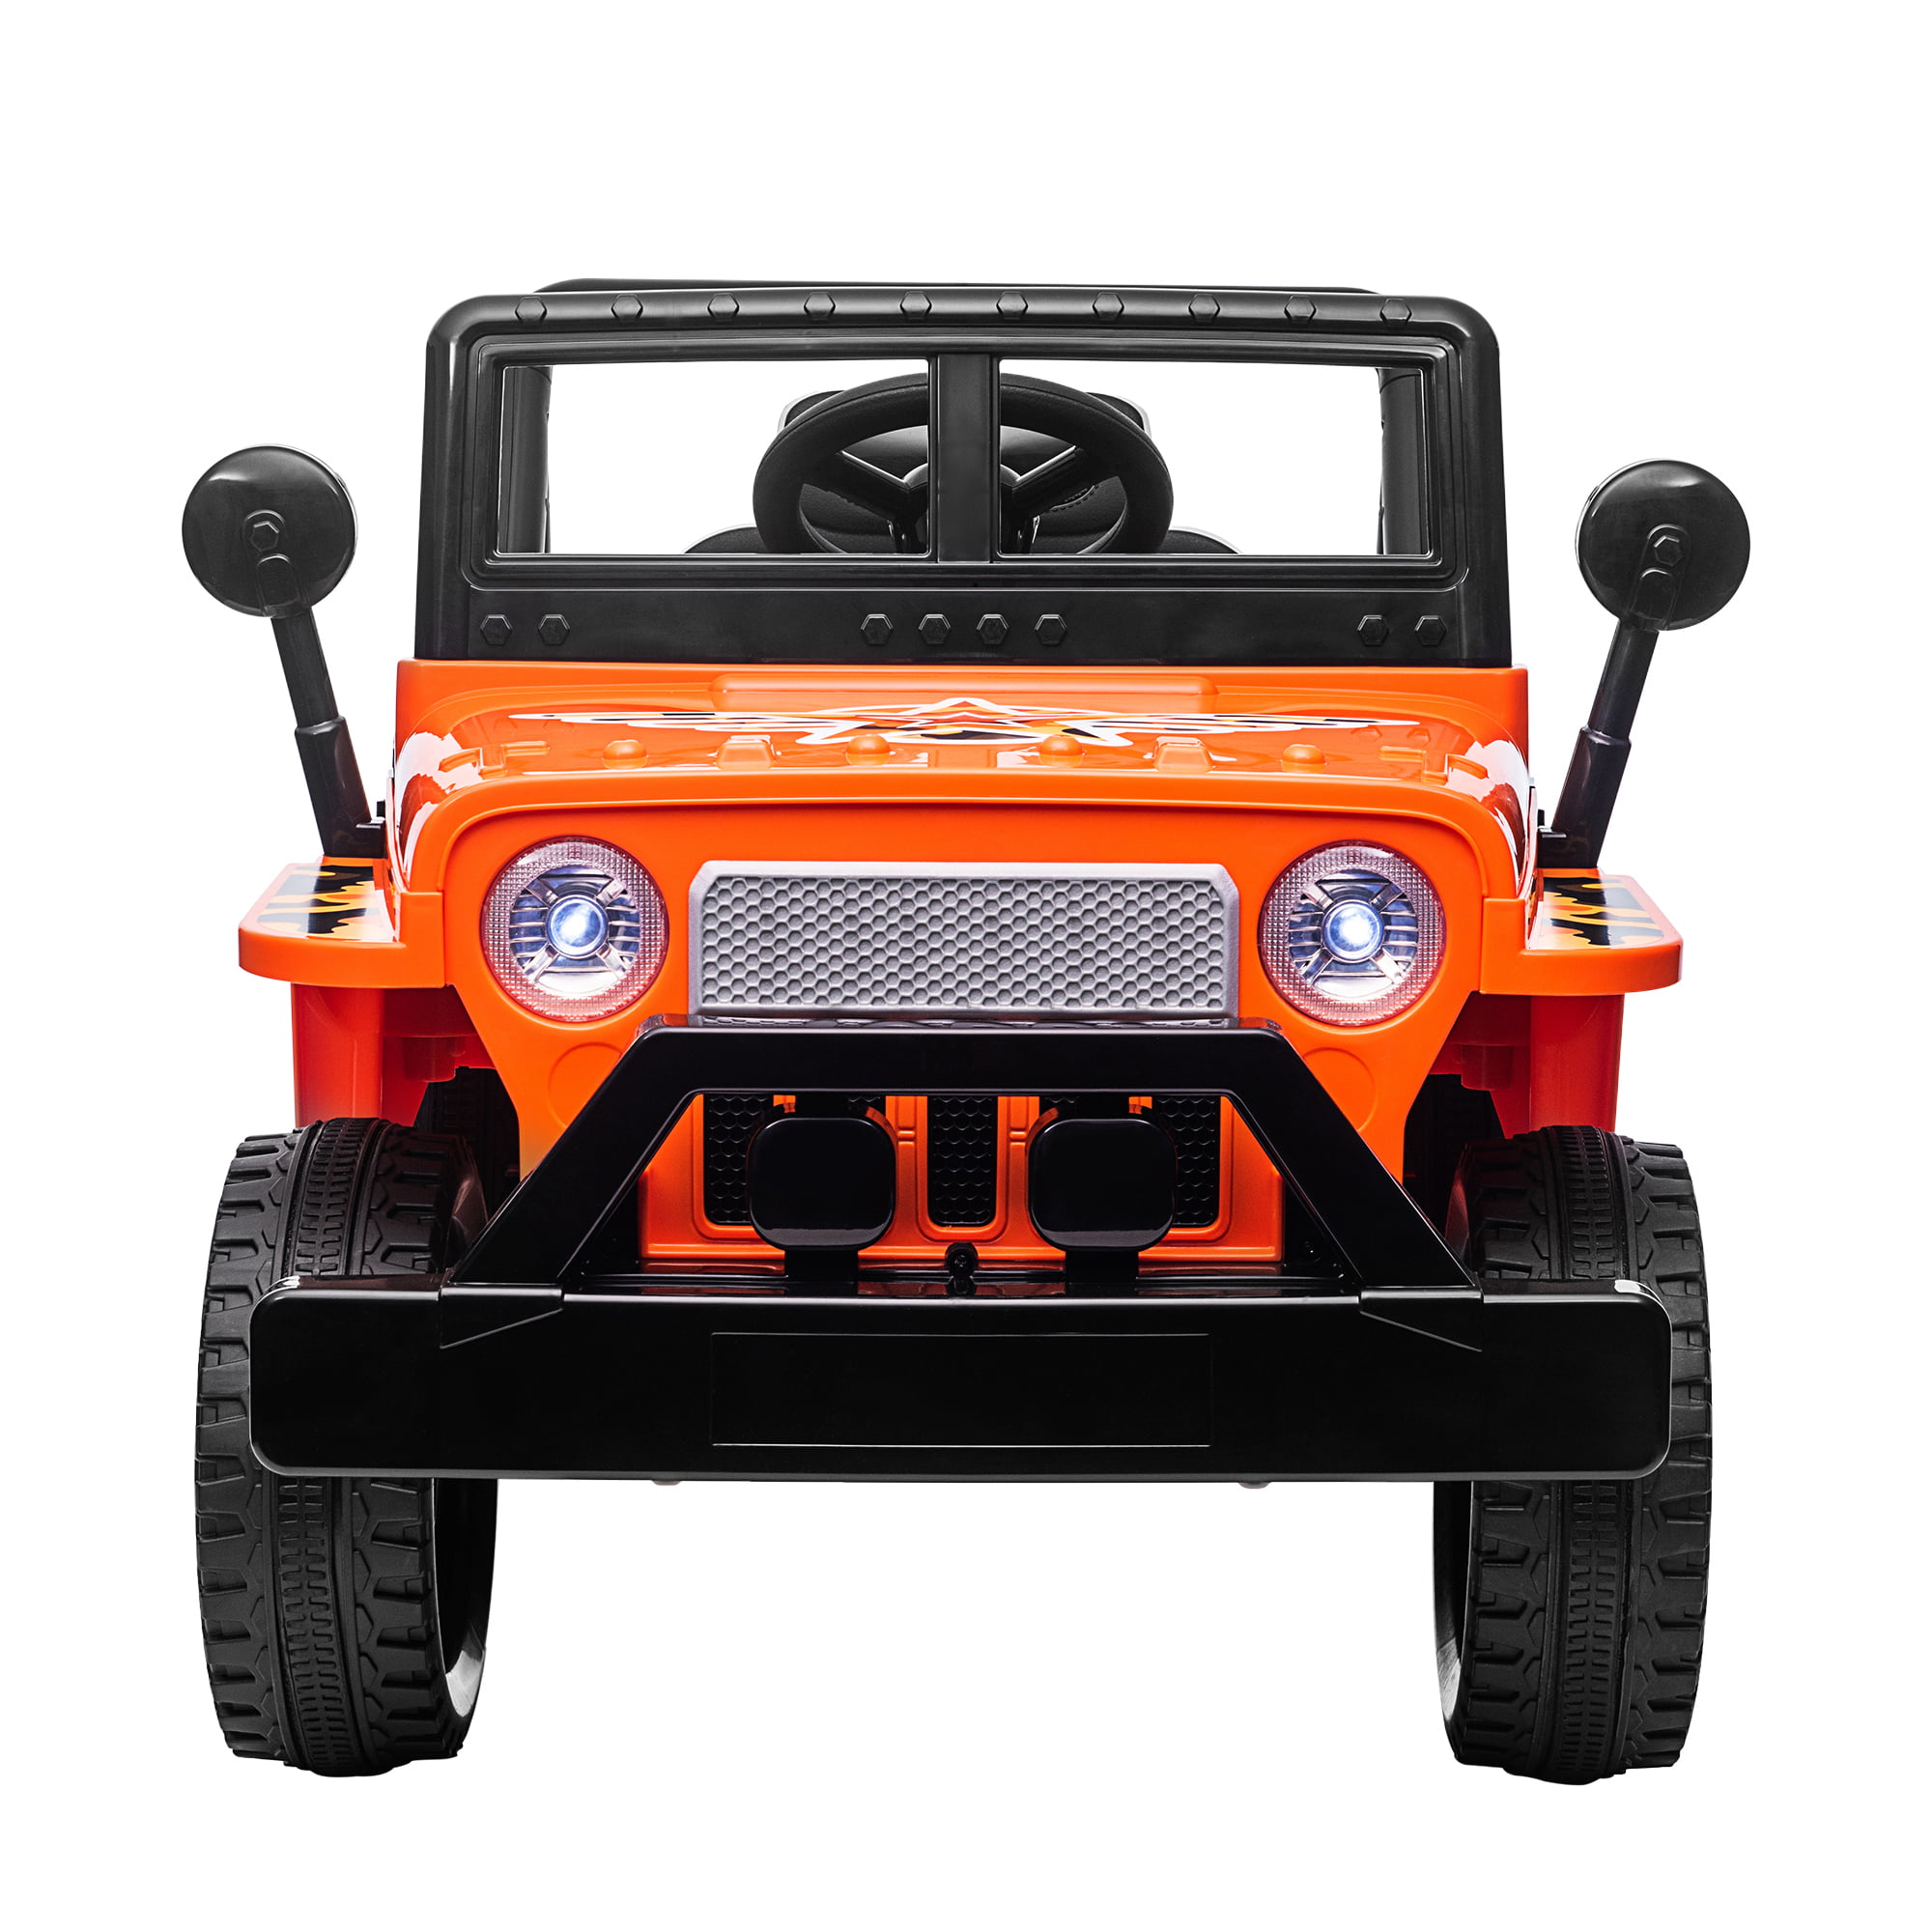 Track 7 Kids Ride on Truck,12V Battery Powered Toy Vehicle for Boys Girls,Safe Seat,Lights,Orange